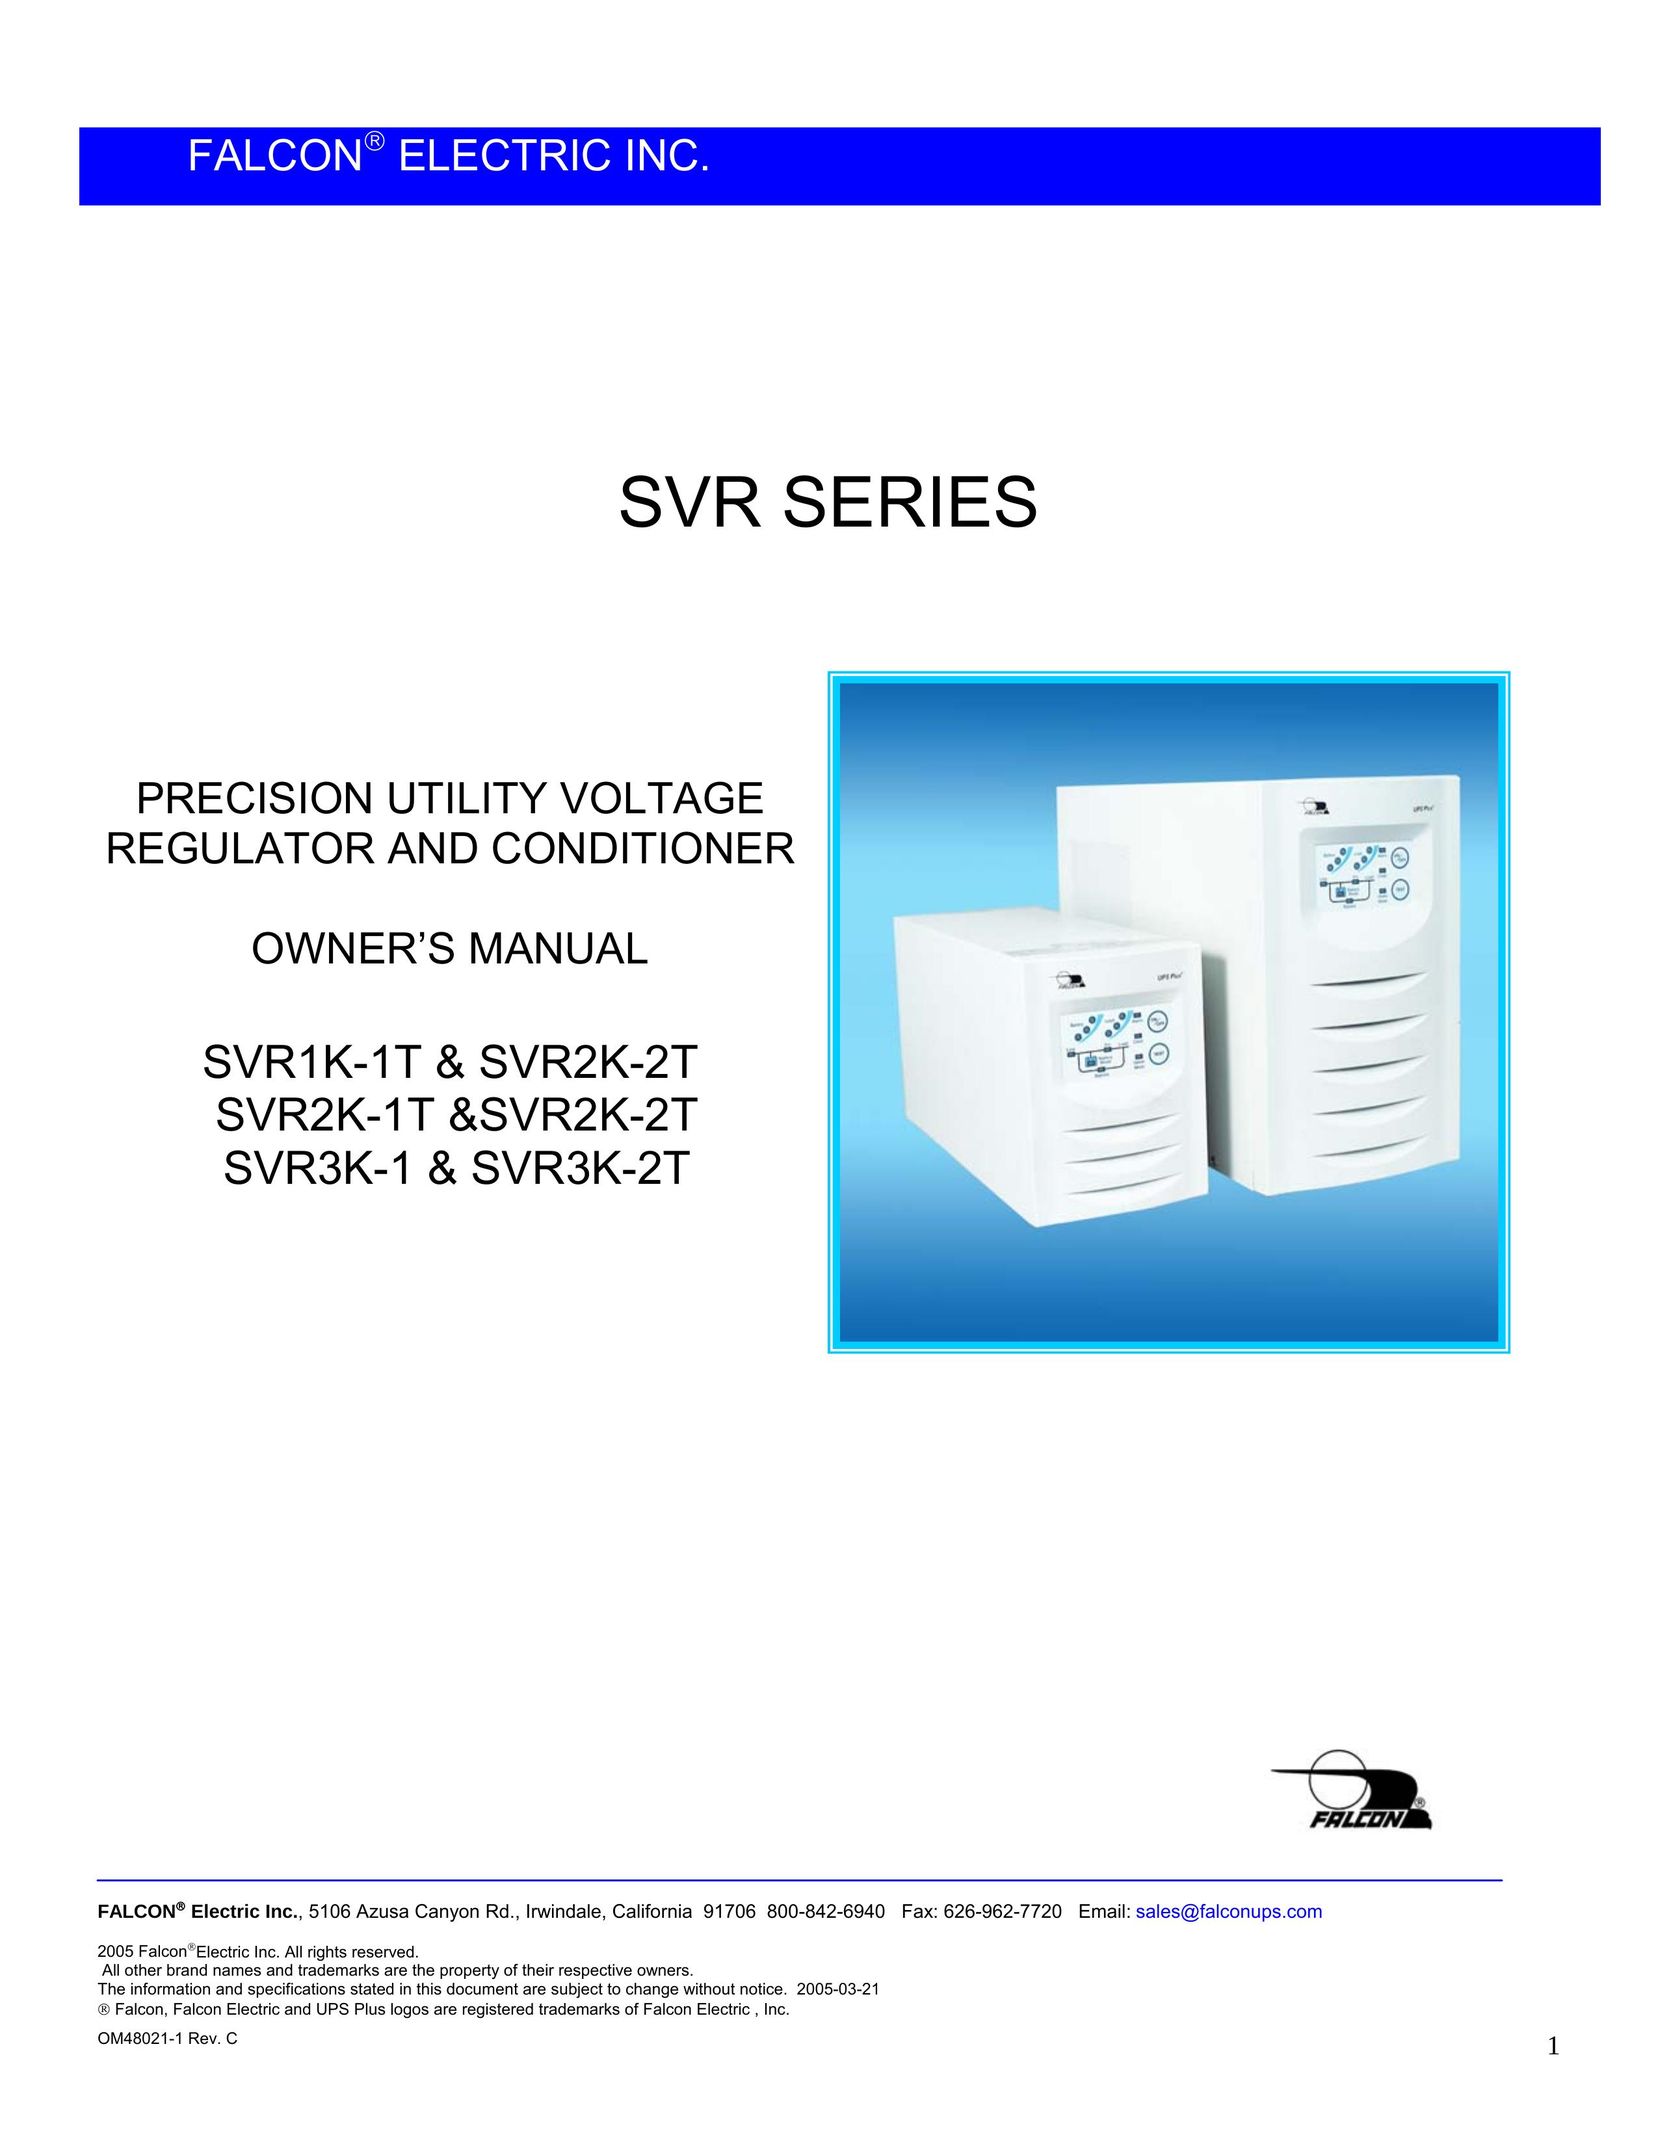 Falcon SVR3K-1 Power Supply User Manual